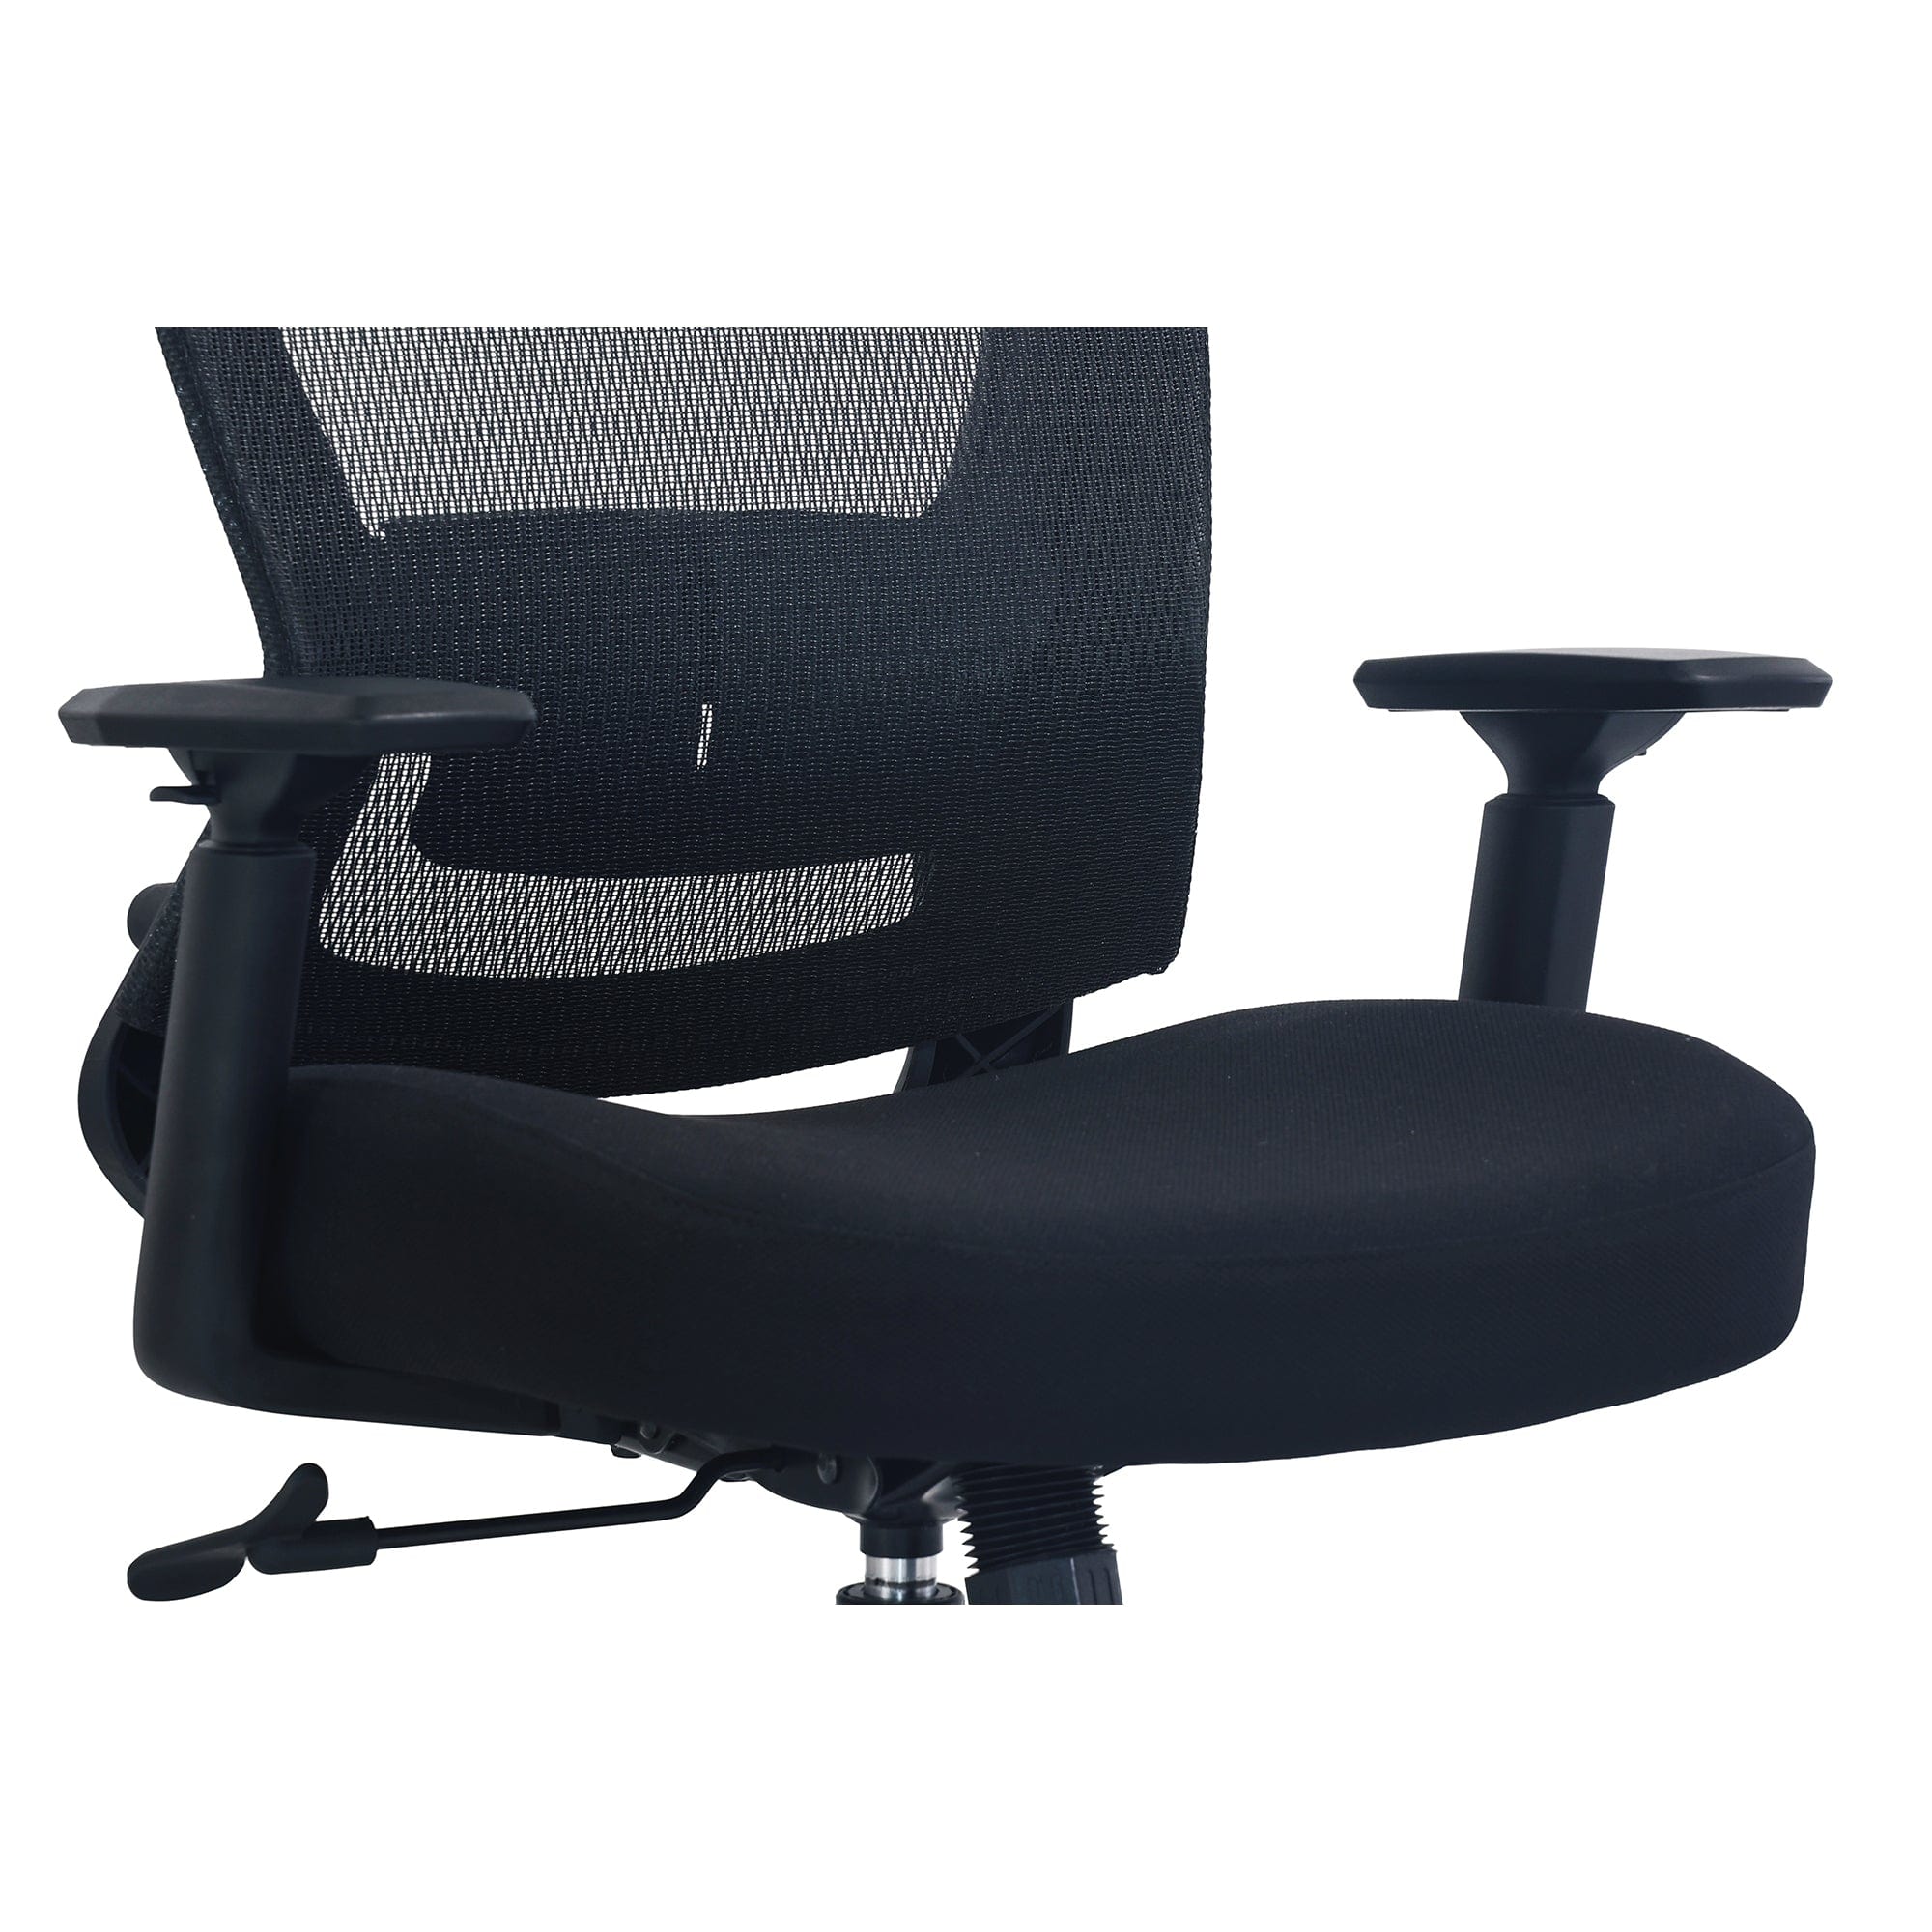 Daisey Fabric/Mesh Seat Task Chair